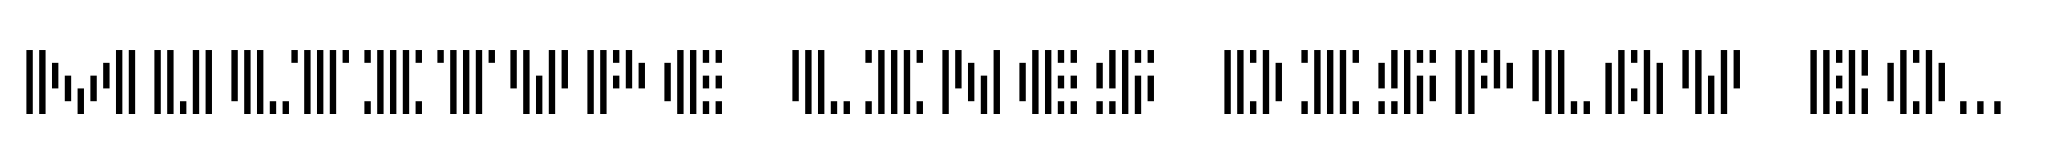 MultiType Lines Display Bold 2 image